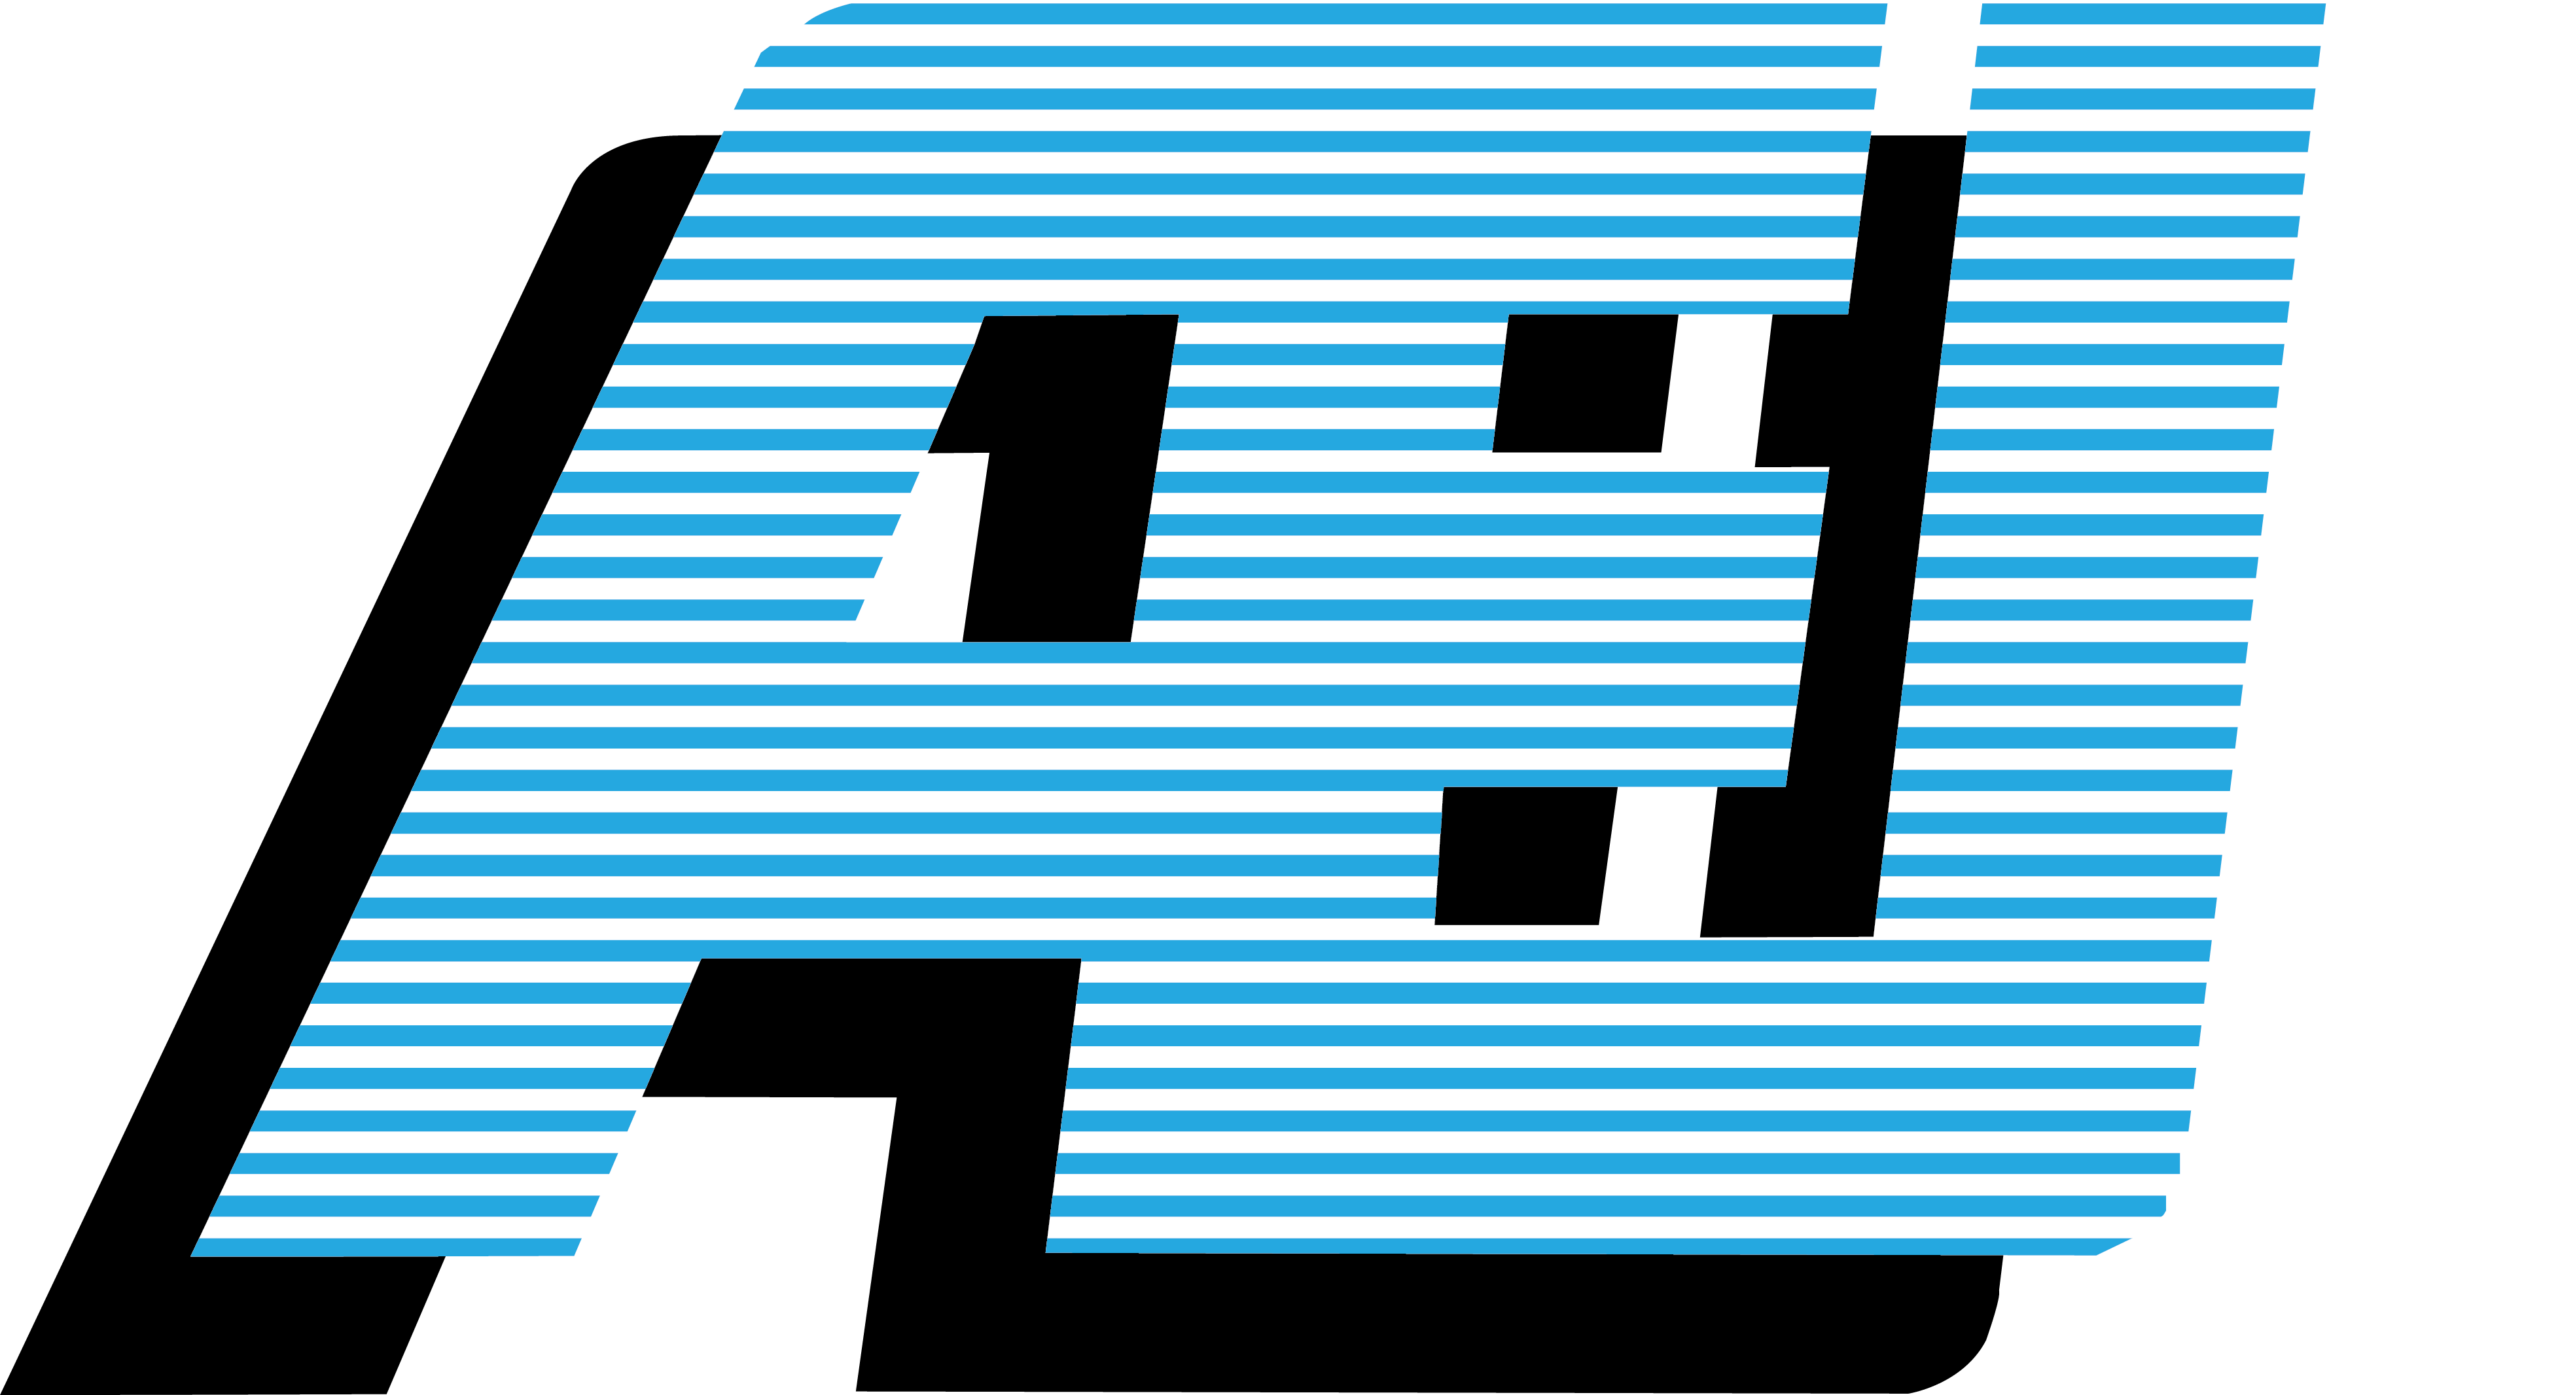 AEI-logo